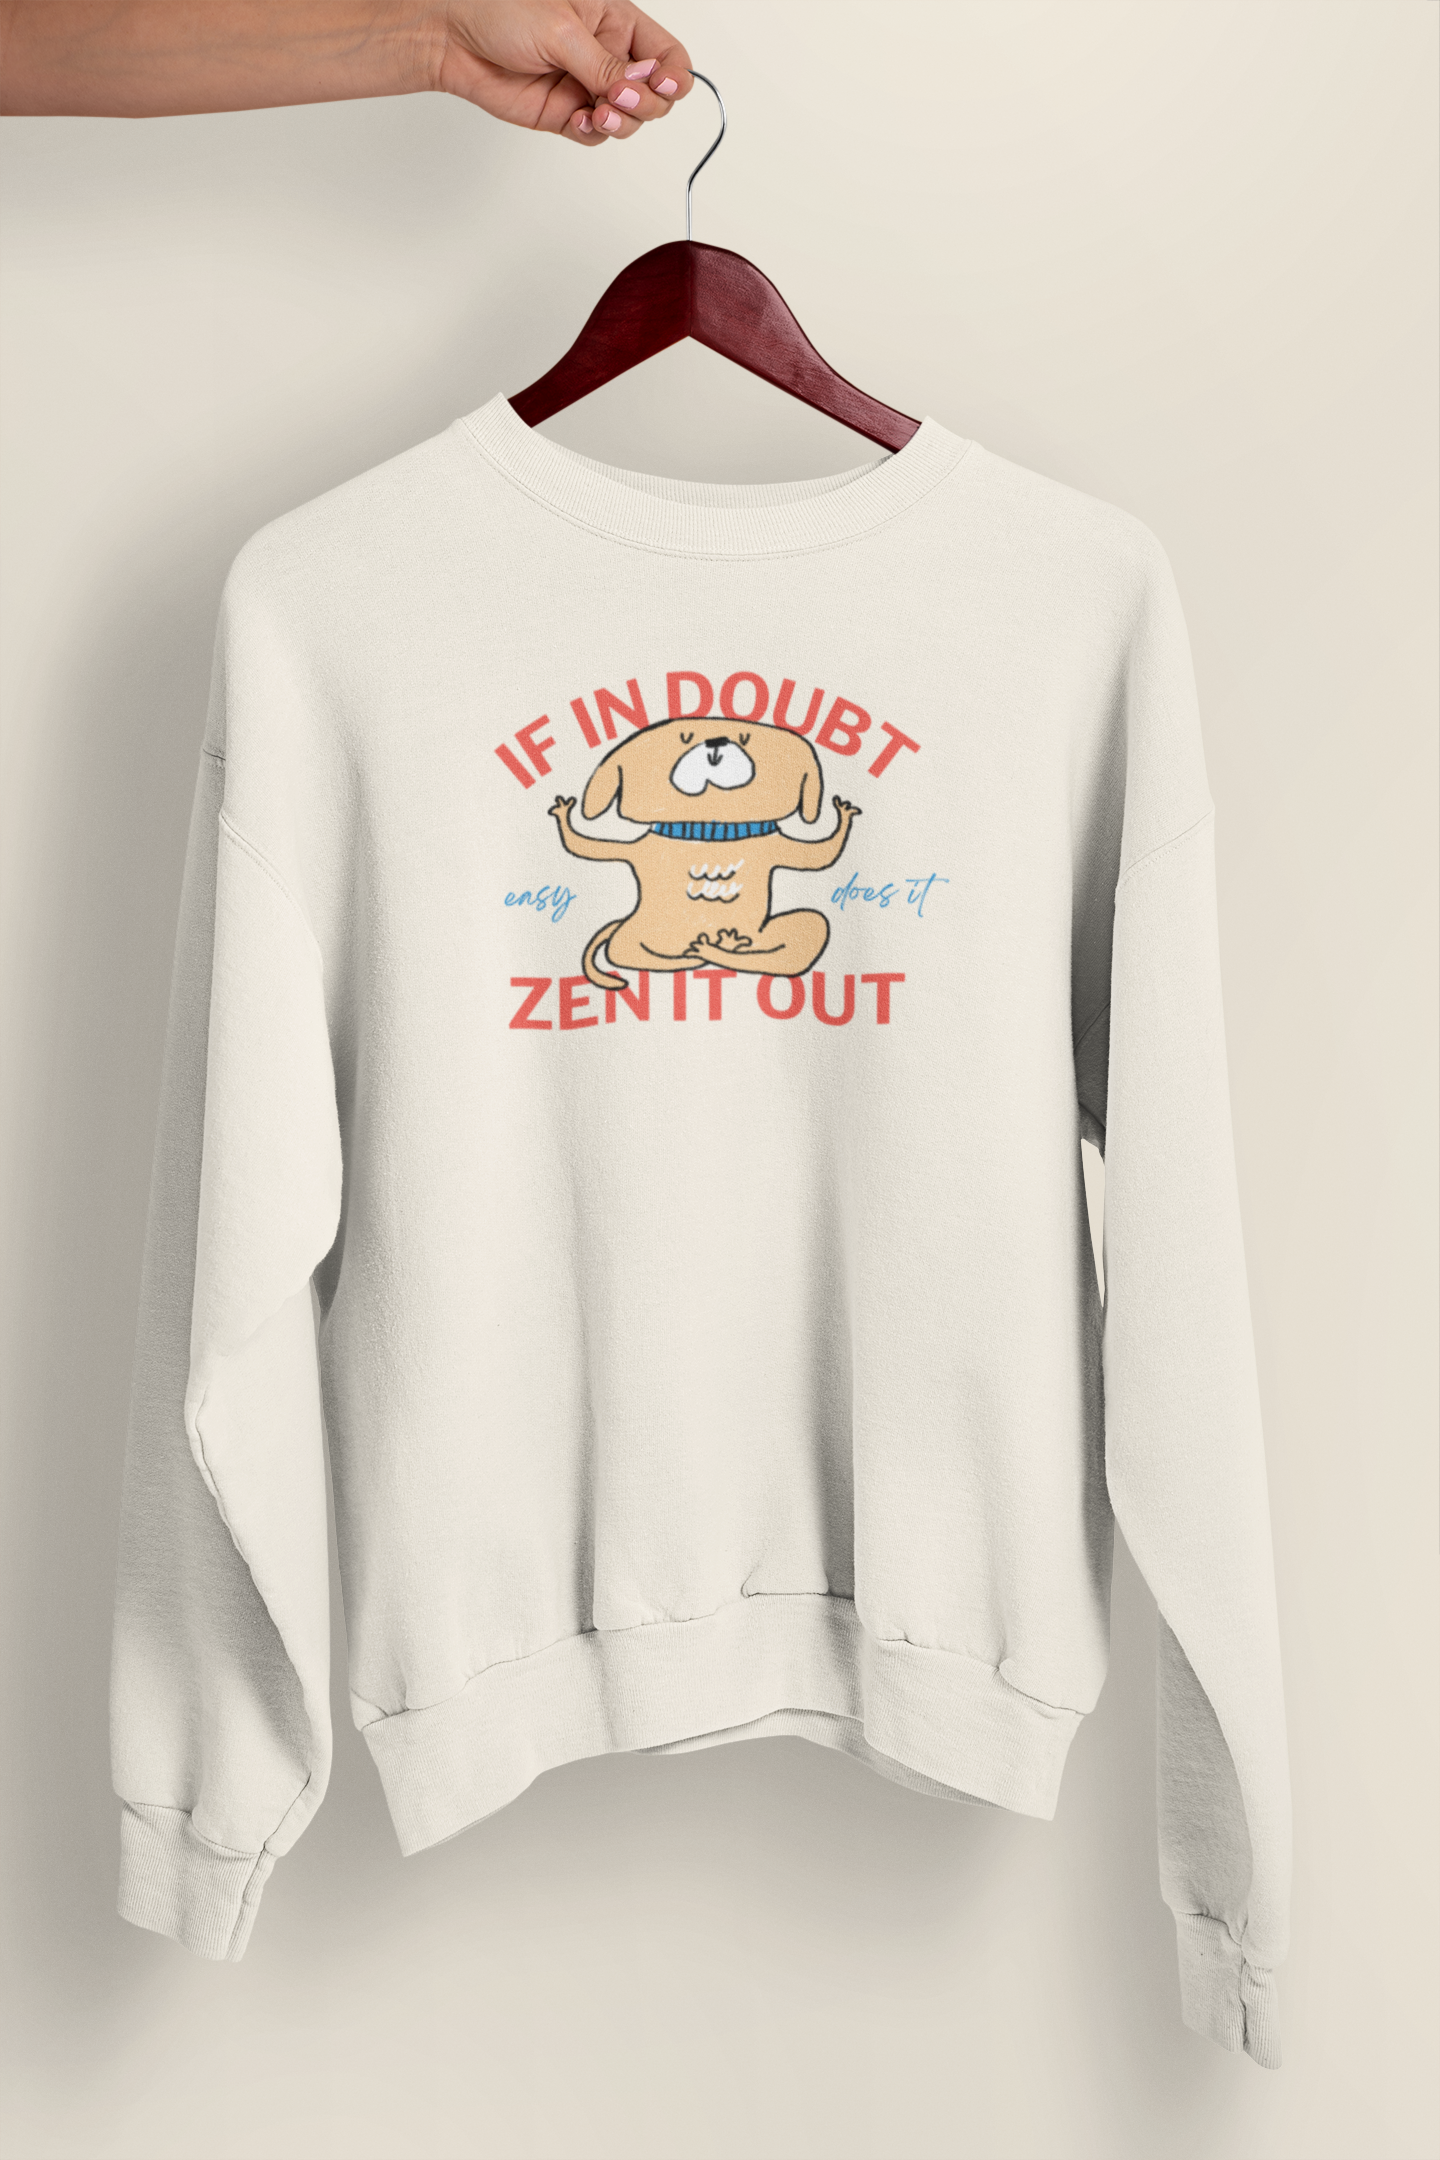 If In Doubt Zen It Out |  Unisex Sweatshirt